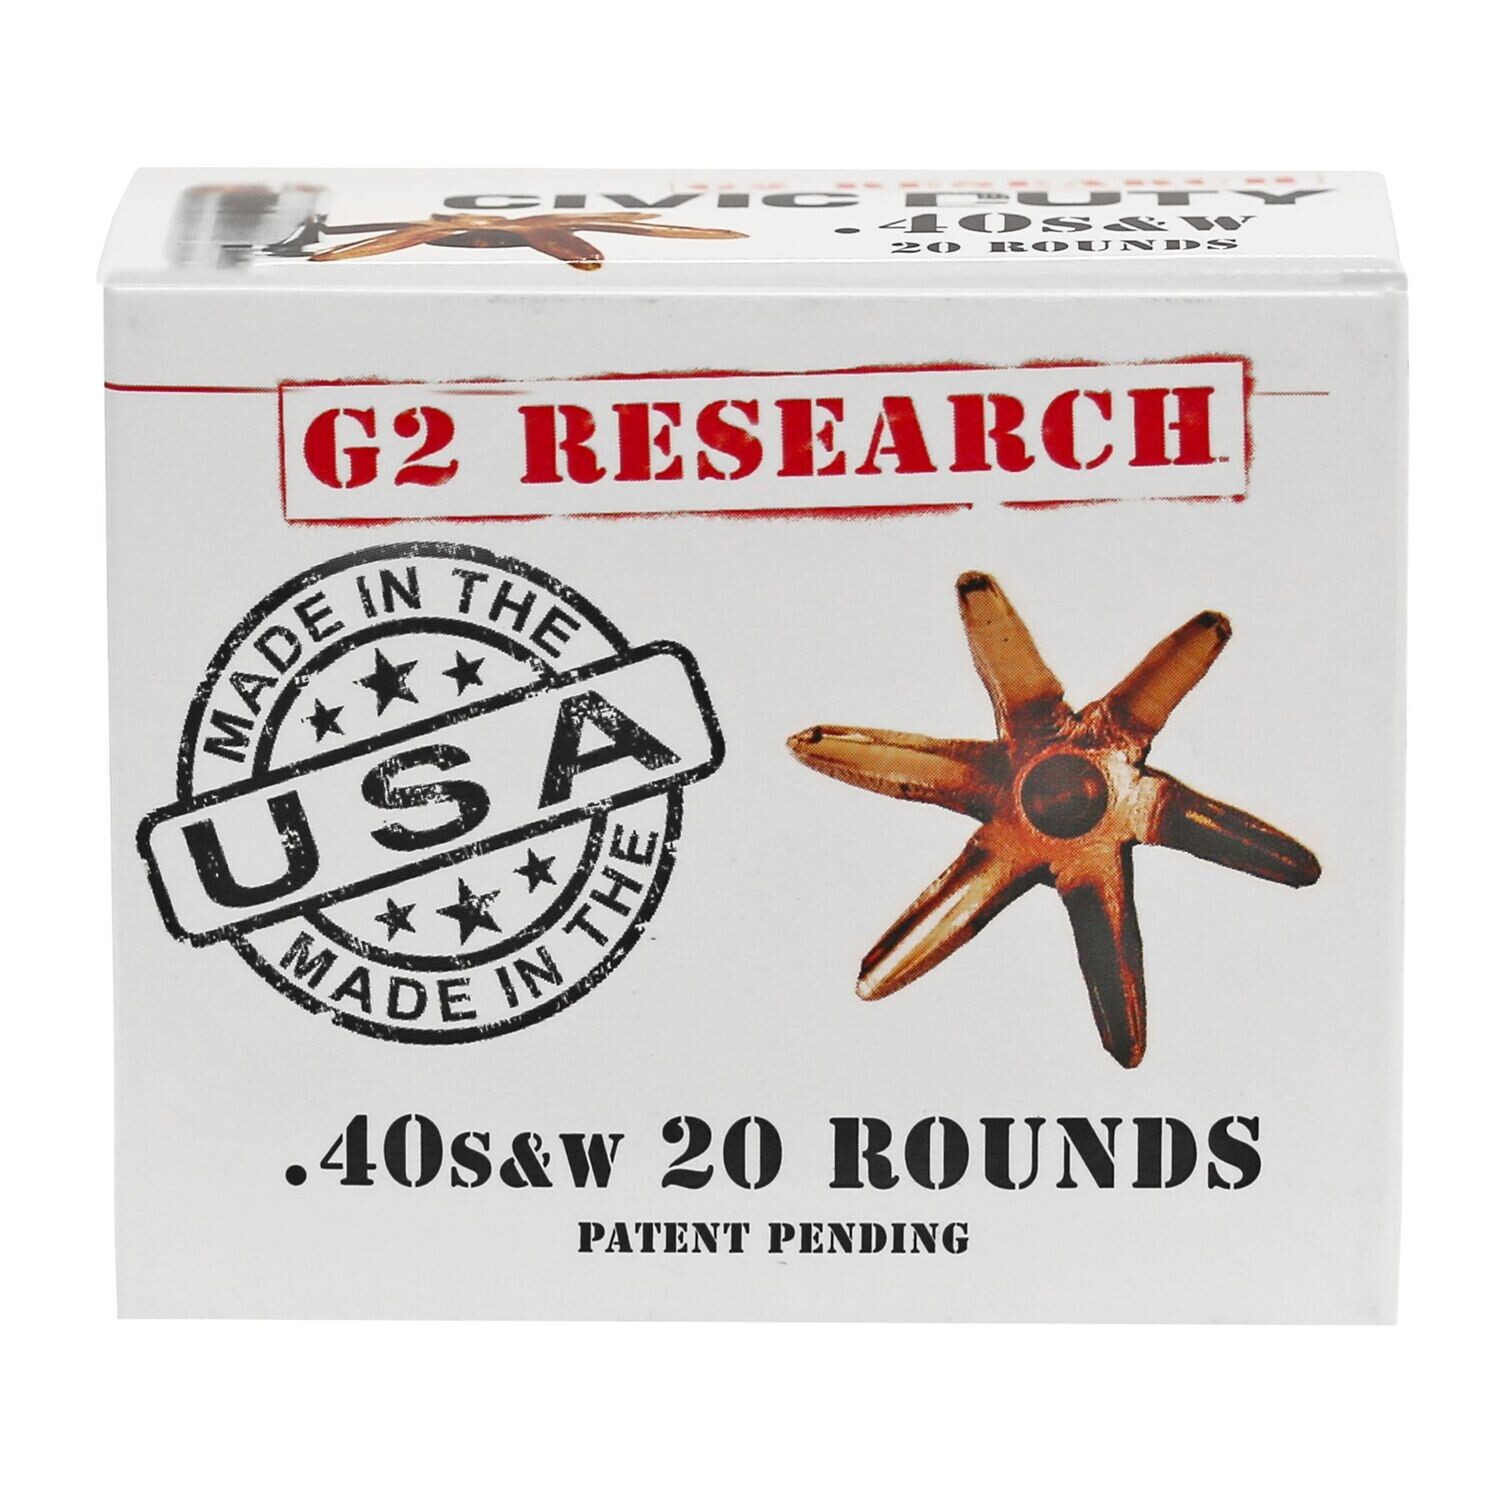 G2 Research, Civic Duty, 40S&W, 122 Grain, Lead Free Copper, 20 Round Box, California Certified Nonlead Ammunition